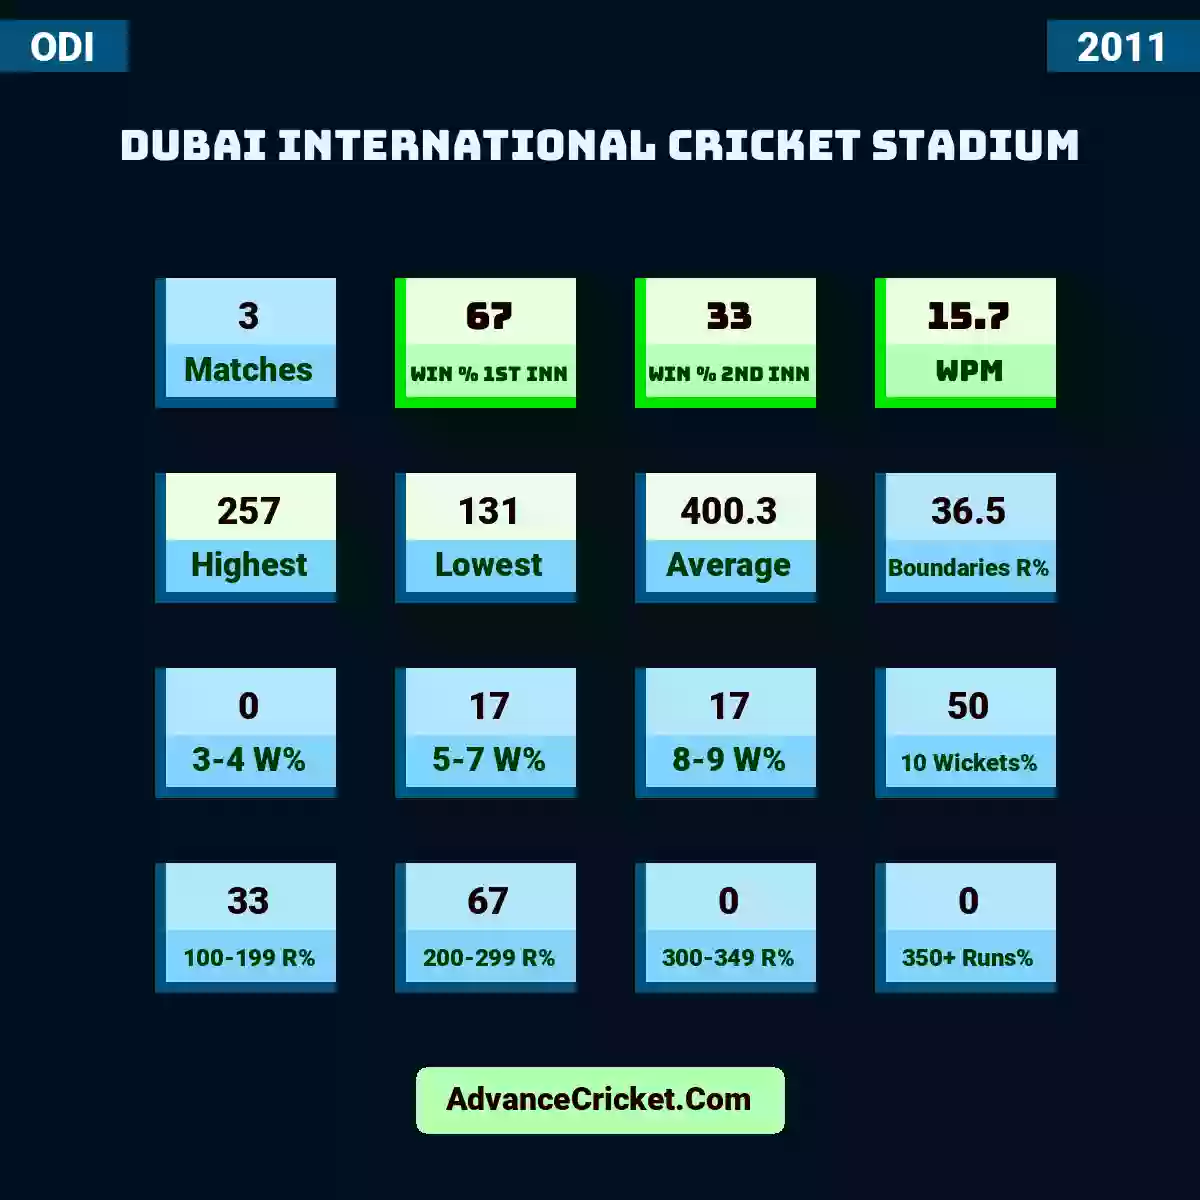 Image showing Dubai International Cricket Stadium with Matches: 3, Win % 1st Inn: 67, Win % 2nd Inn: 33, WPM: 15.7, Highest: 257, Lowest: 131, Average: 400.3, Boundaries R%: 36.5, 3-4 W%: 0, 5-7 W%: 17, 8-9 W%: 17, 10 Wickets%: 50, 100-199 R%: 33, 200-299 R%: 67, 300-349 R%: 0, 350+ Runs%: 0.